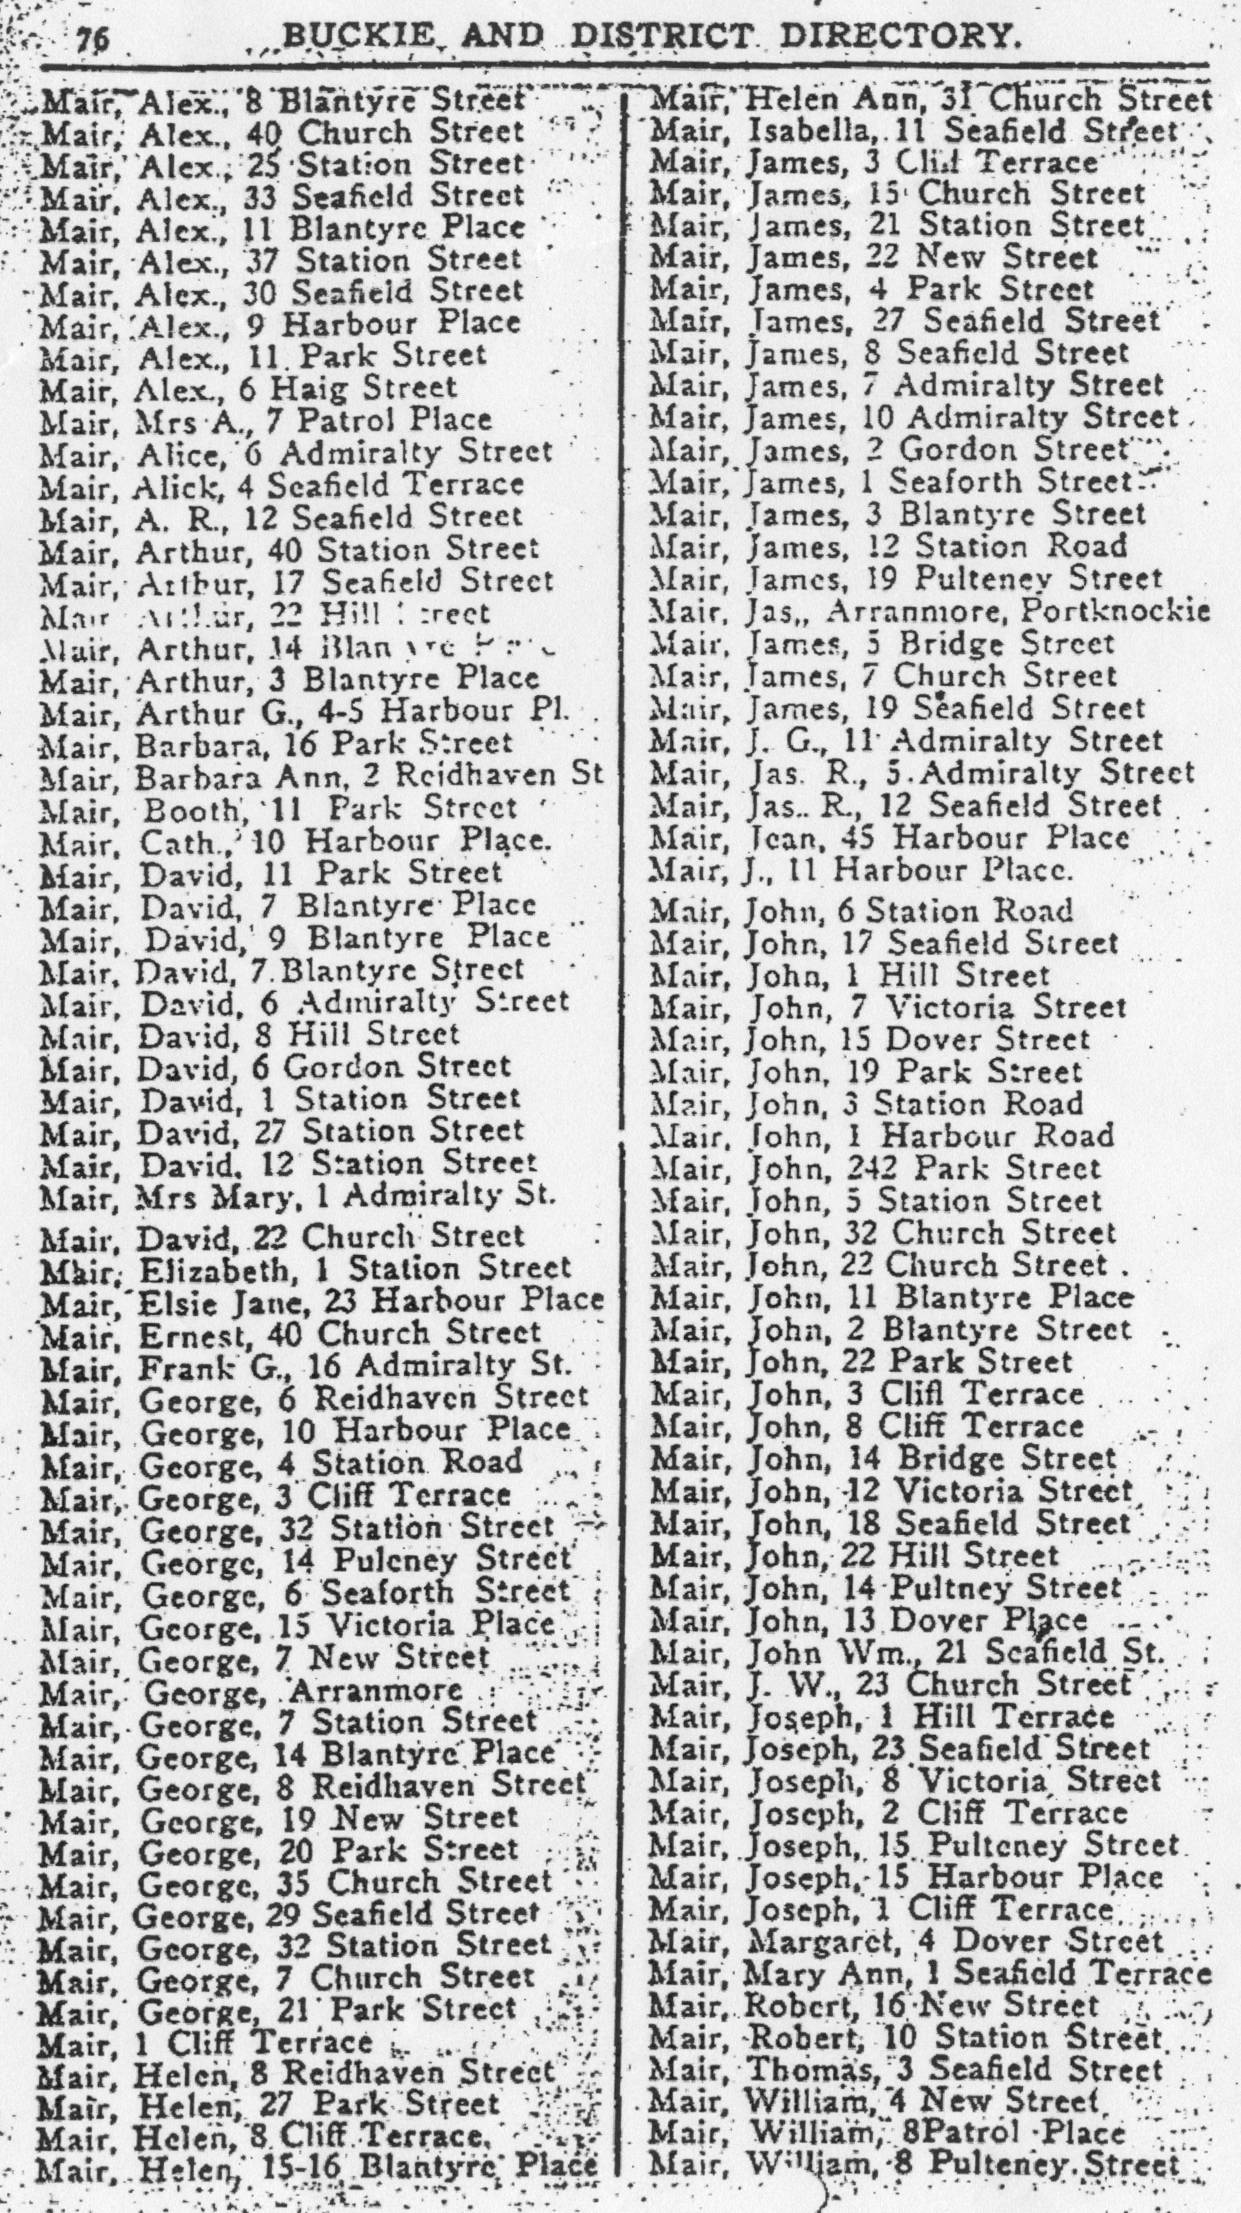 Buckie and District Directory 1926, page 76, Portknockie A-Z